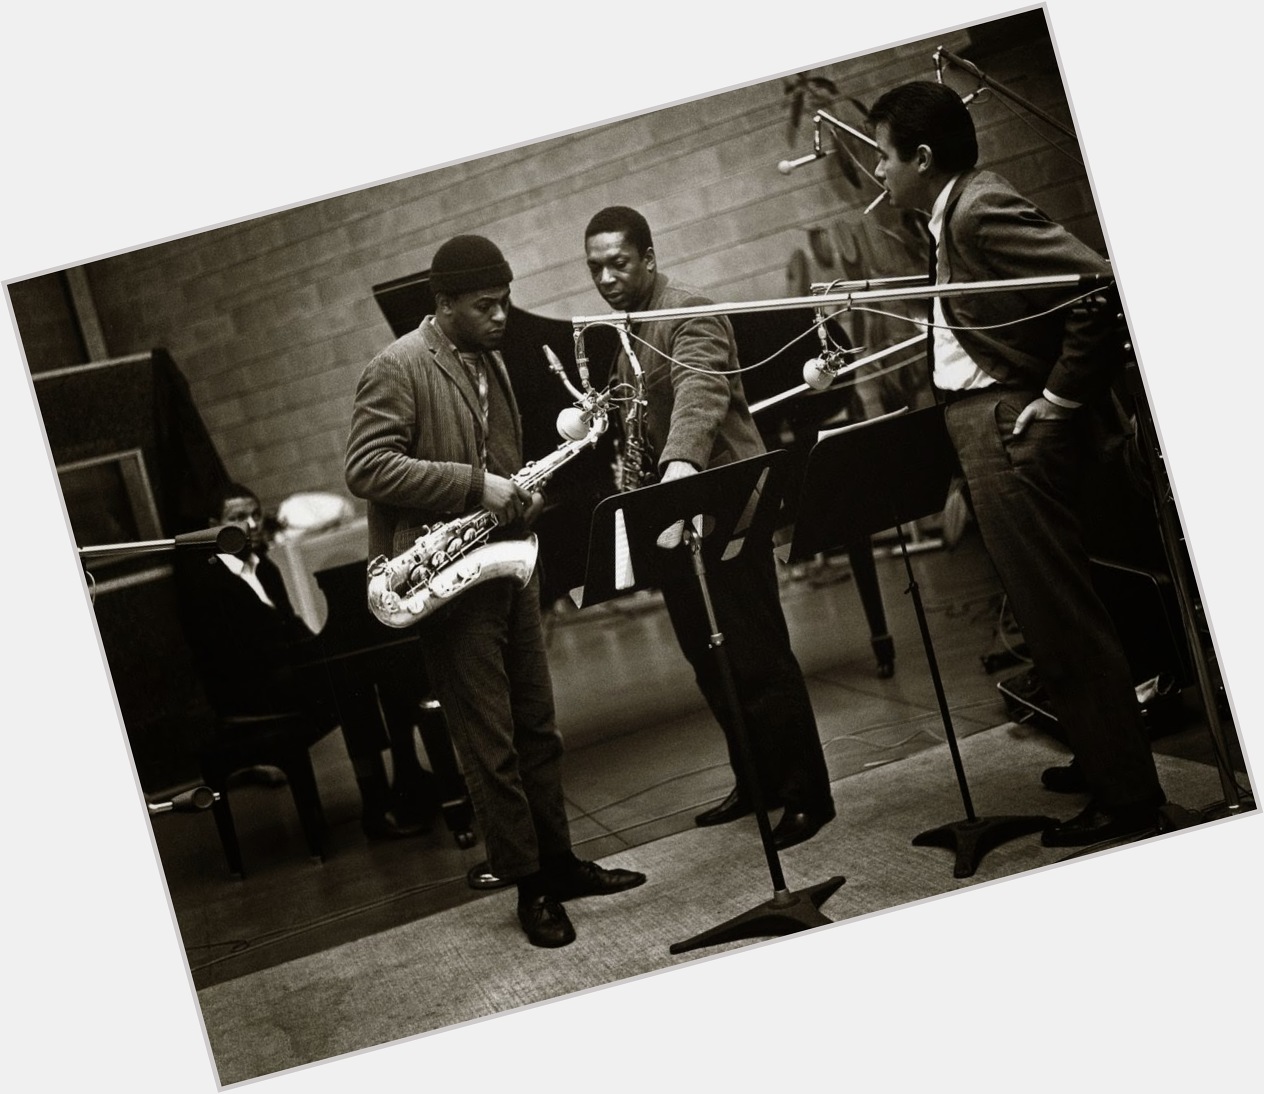 Happy birthday to McCoy Tyner! 

1964 with John Coltrane, Archie Shepp, and producer Bob Thiele. Photo Chuck Stewart 